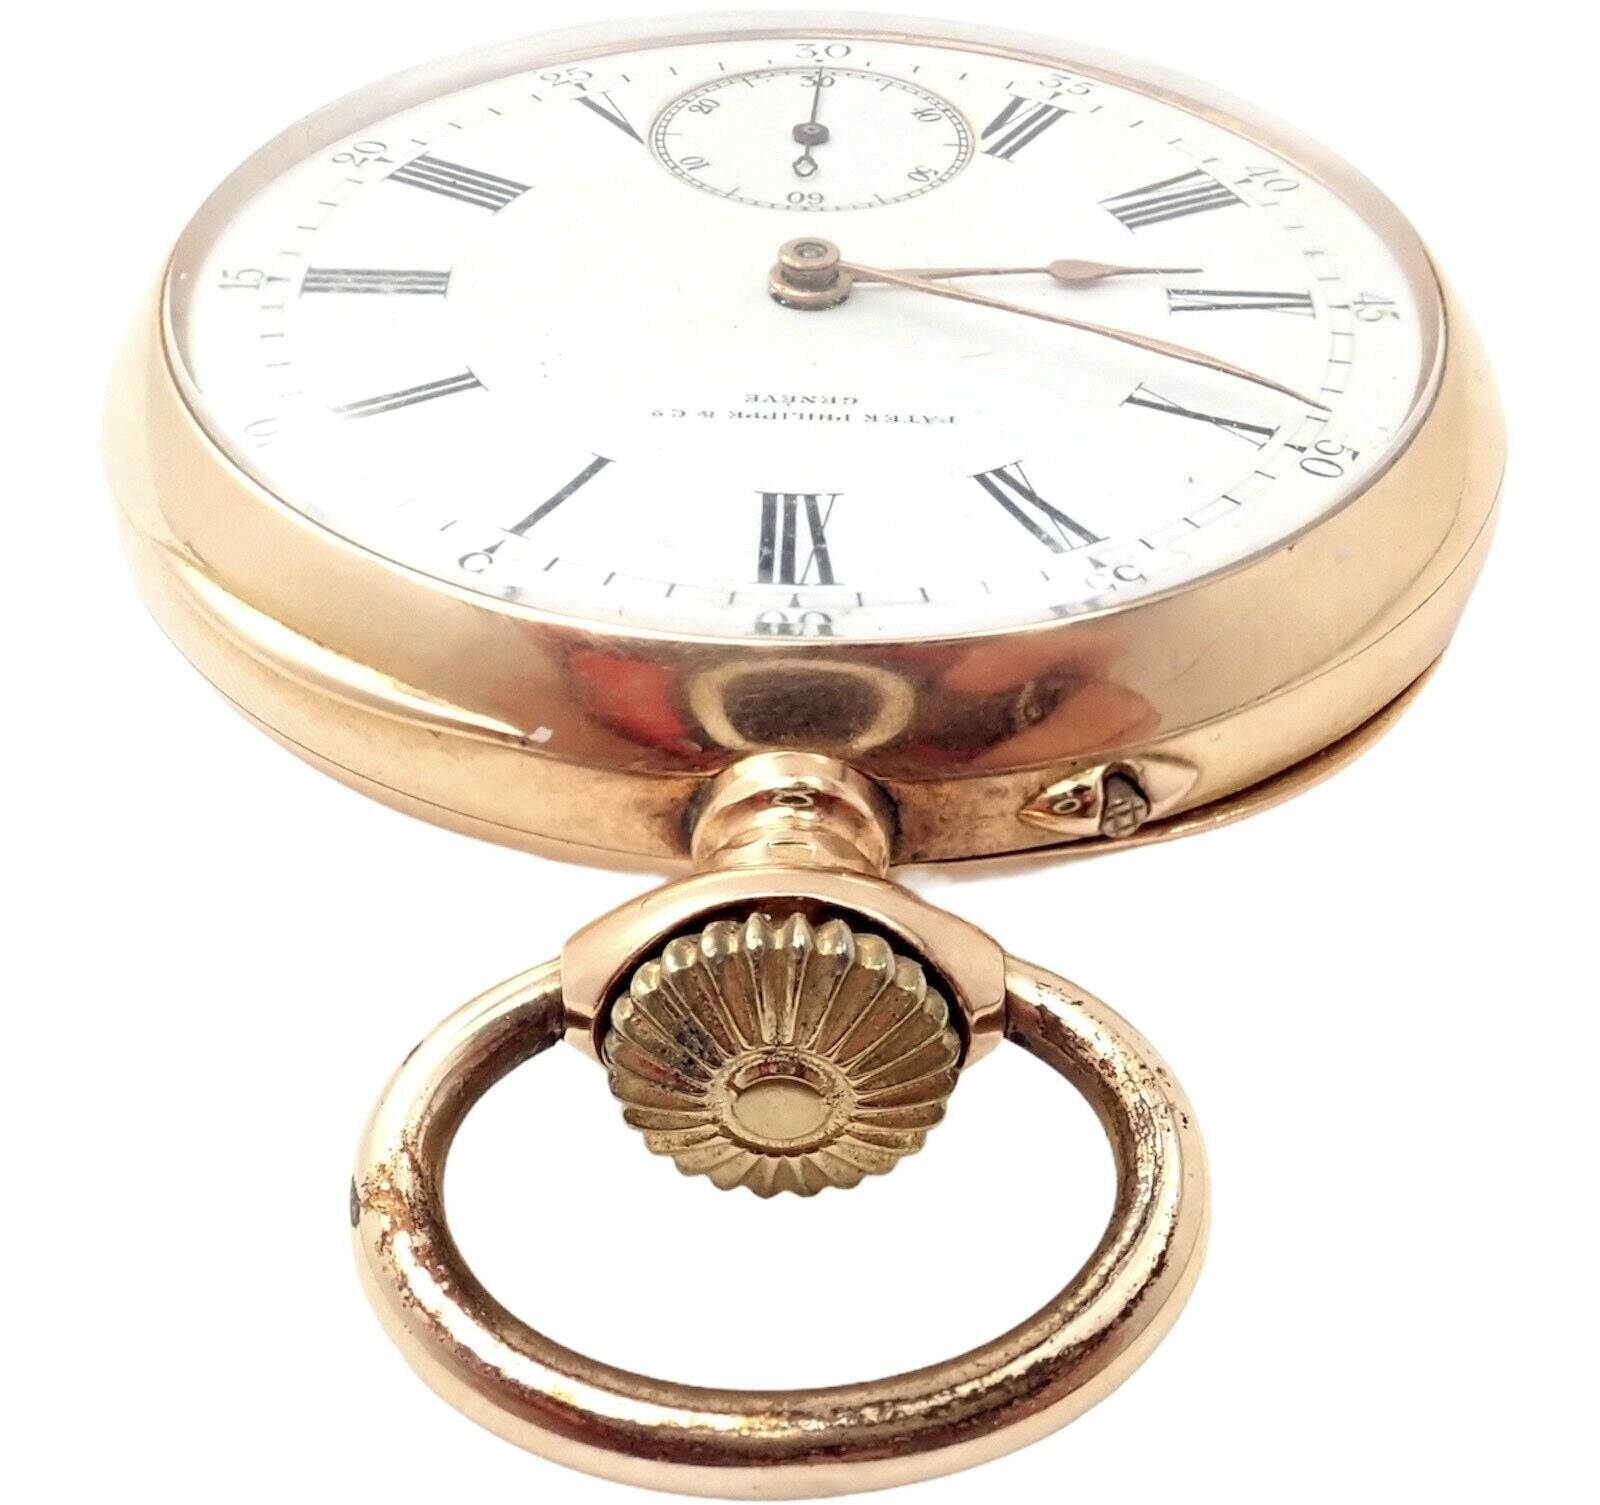 Antique Patek Philippe & Co Geneve Pocket Watch in 18k Rose Gold